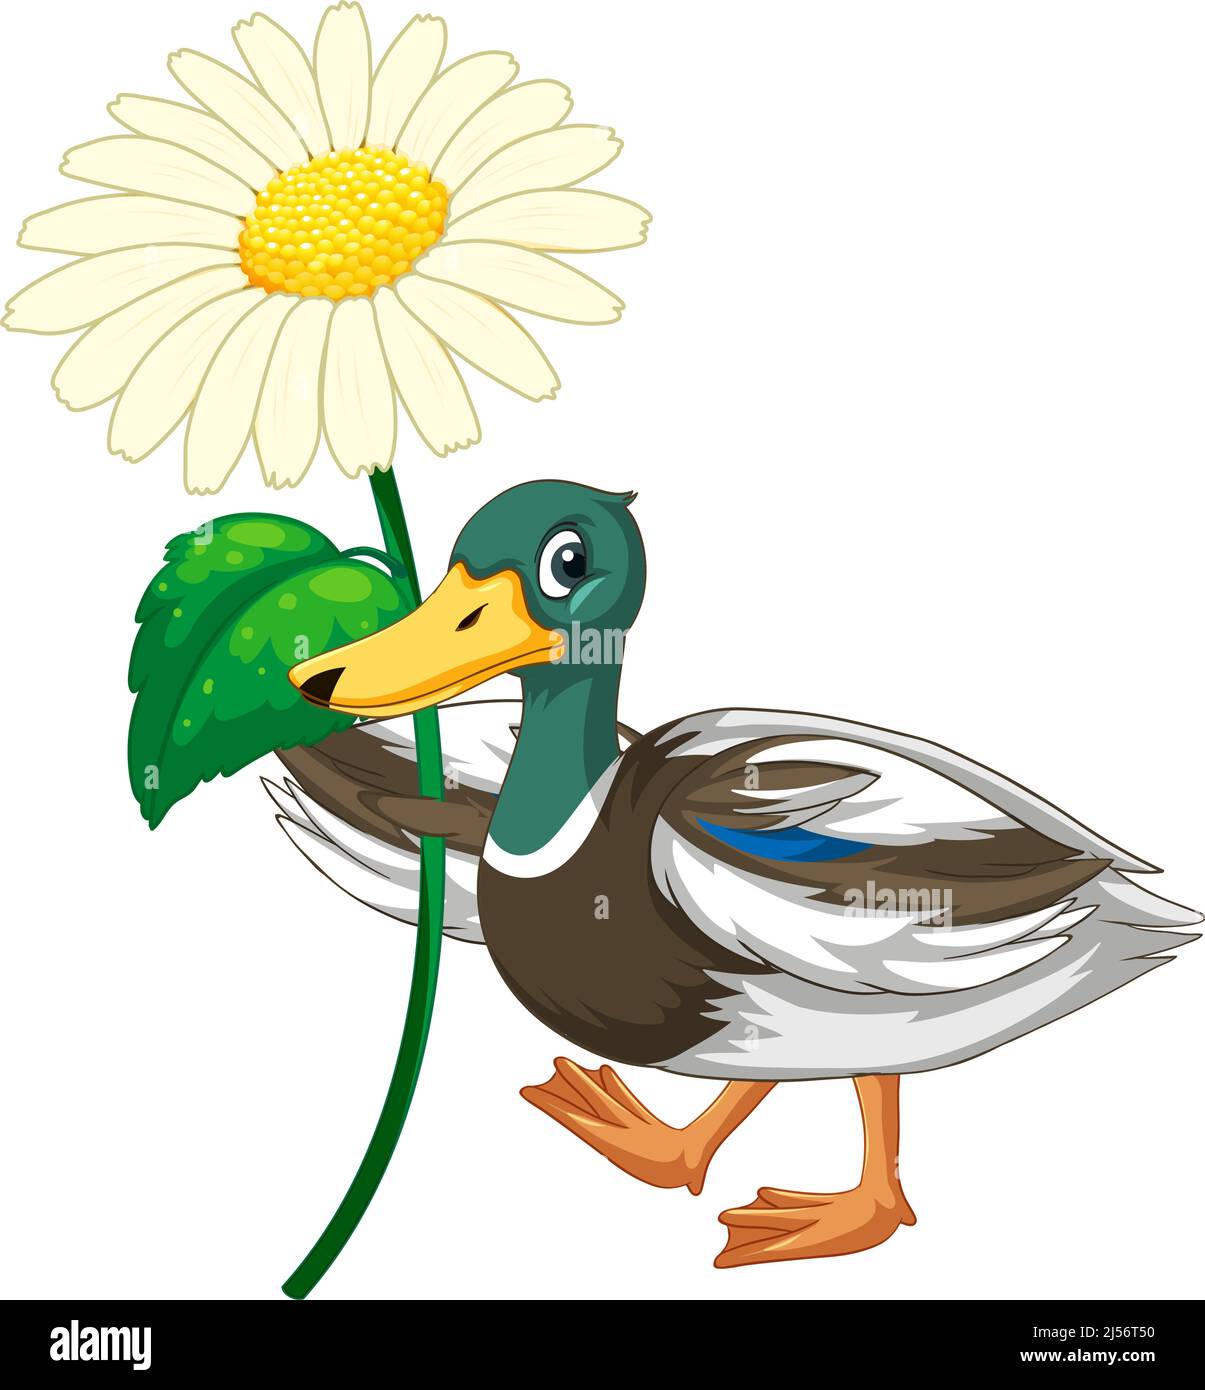 Duck with green head cartoon character illustration Stock Vector